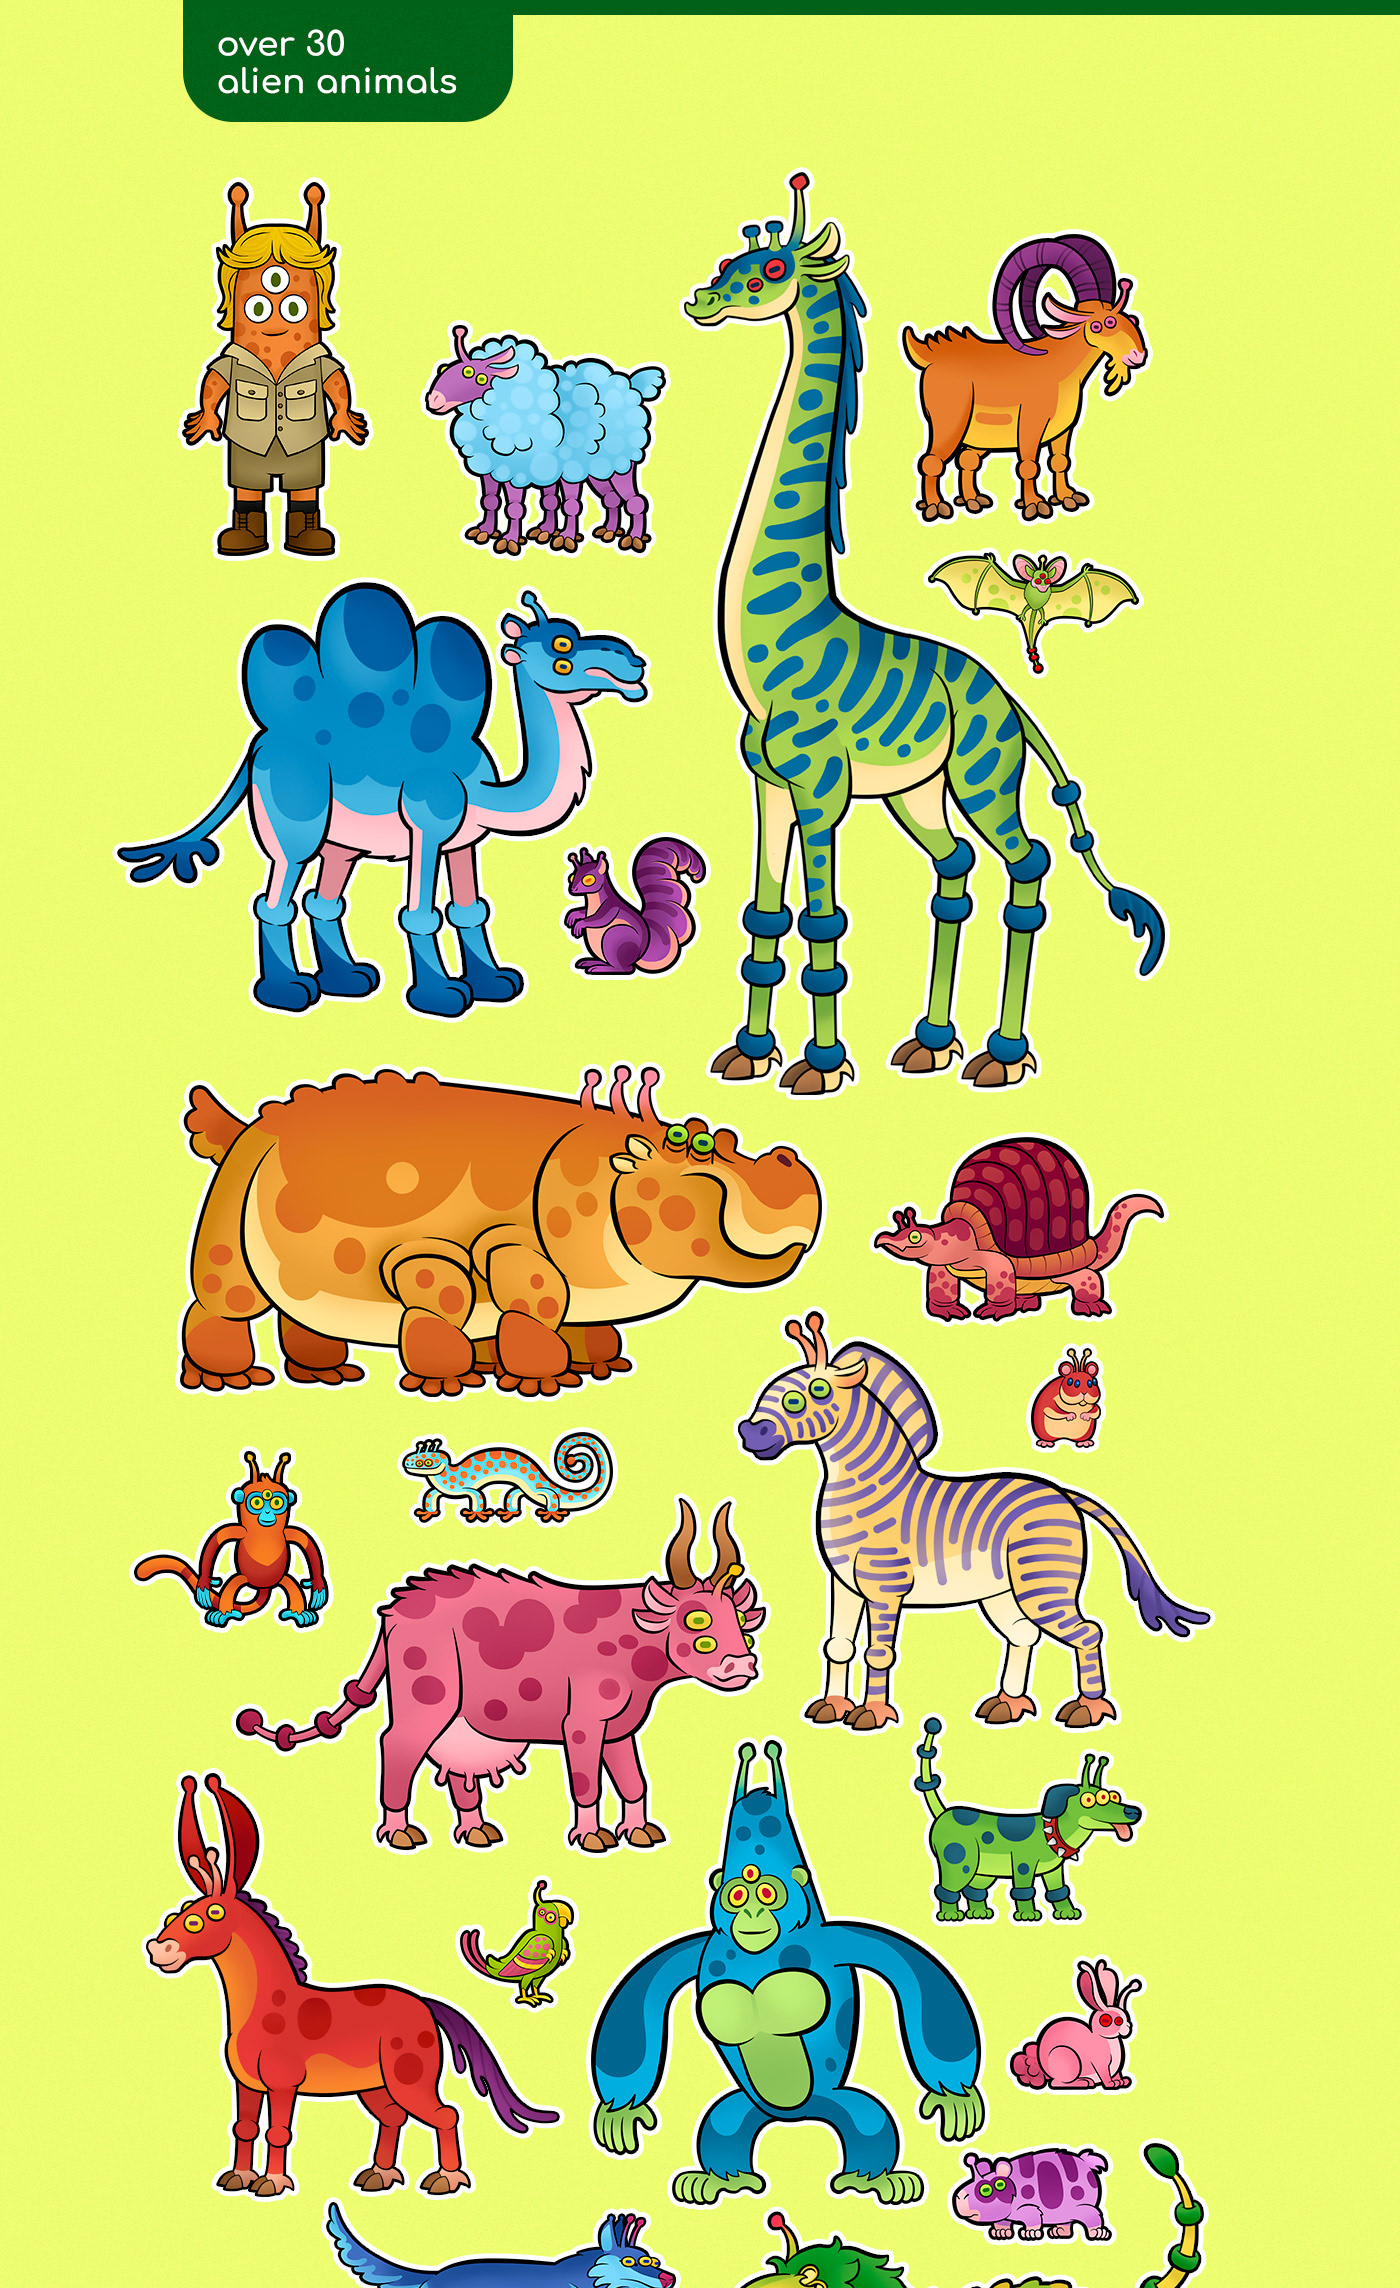 Creature Design Character design  concept art digital illustration game ILLUSTRATION  alien animal illustration children cartoon